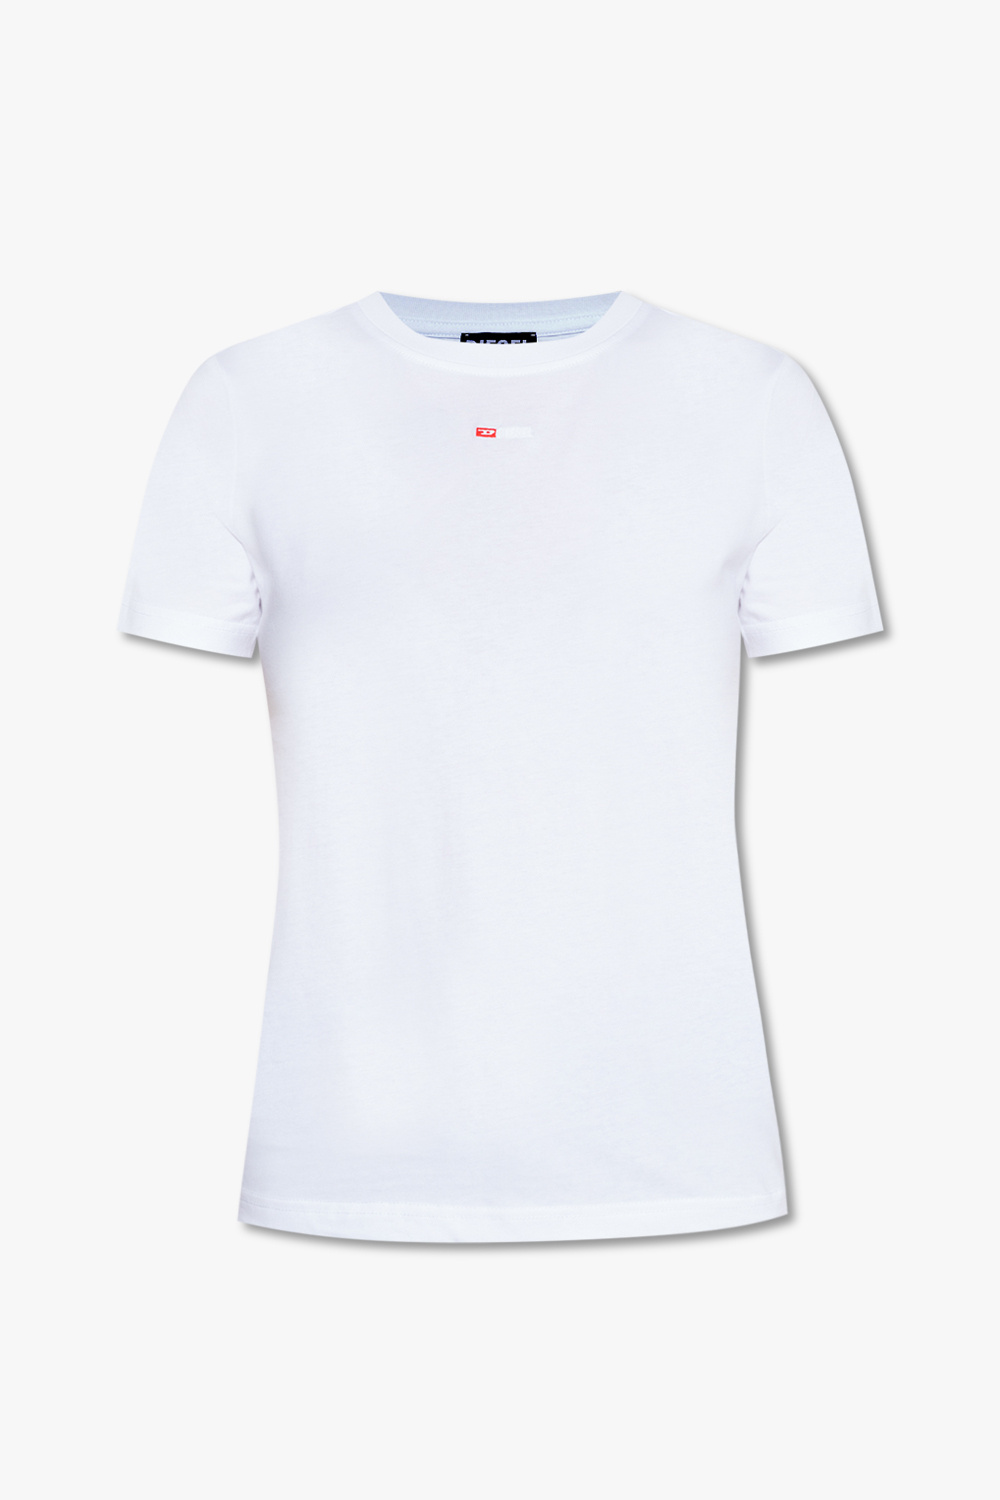 Diesel ‘T-REG-MICRODIV’ T-shirt